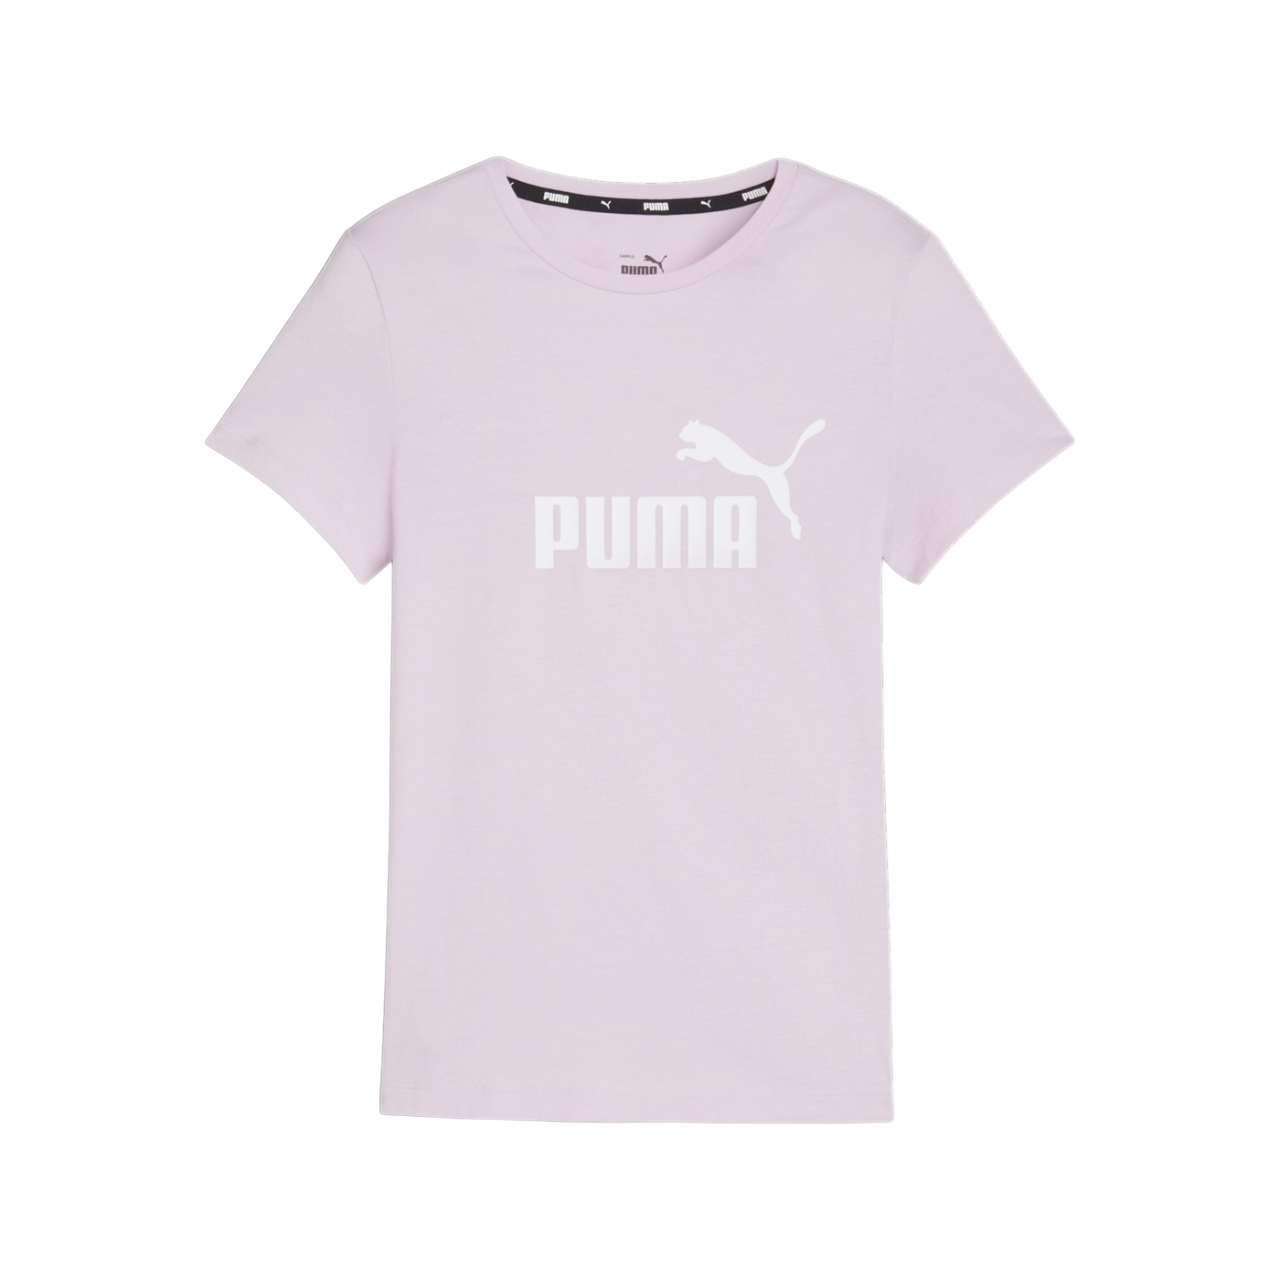 Puma maglietta manica corta da bambina  ESS stampa logo 587029 60 glicine